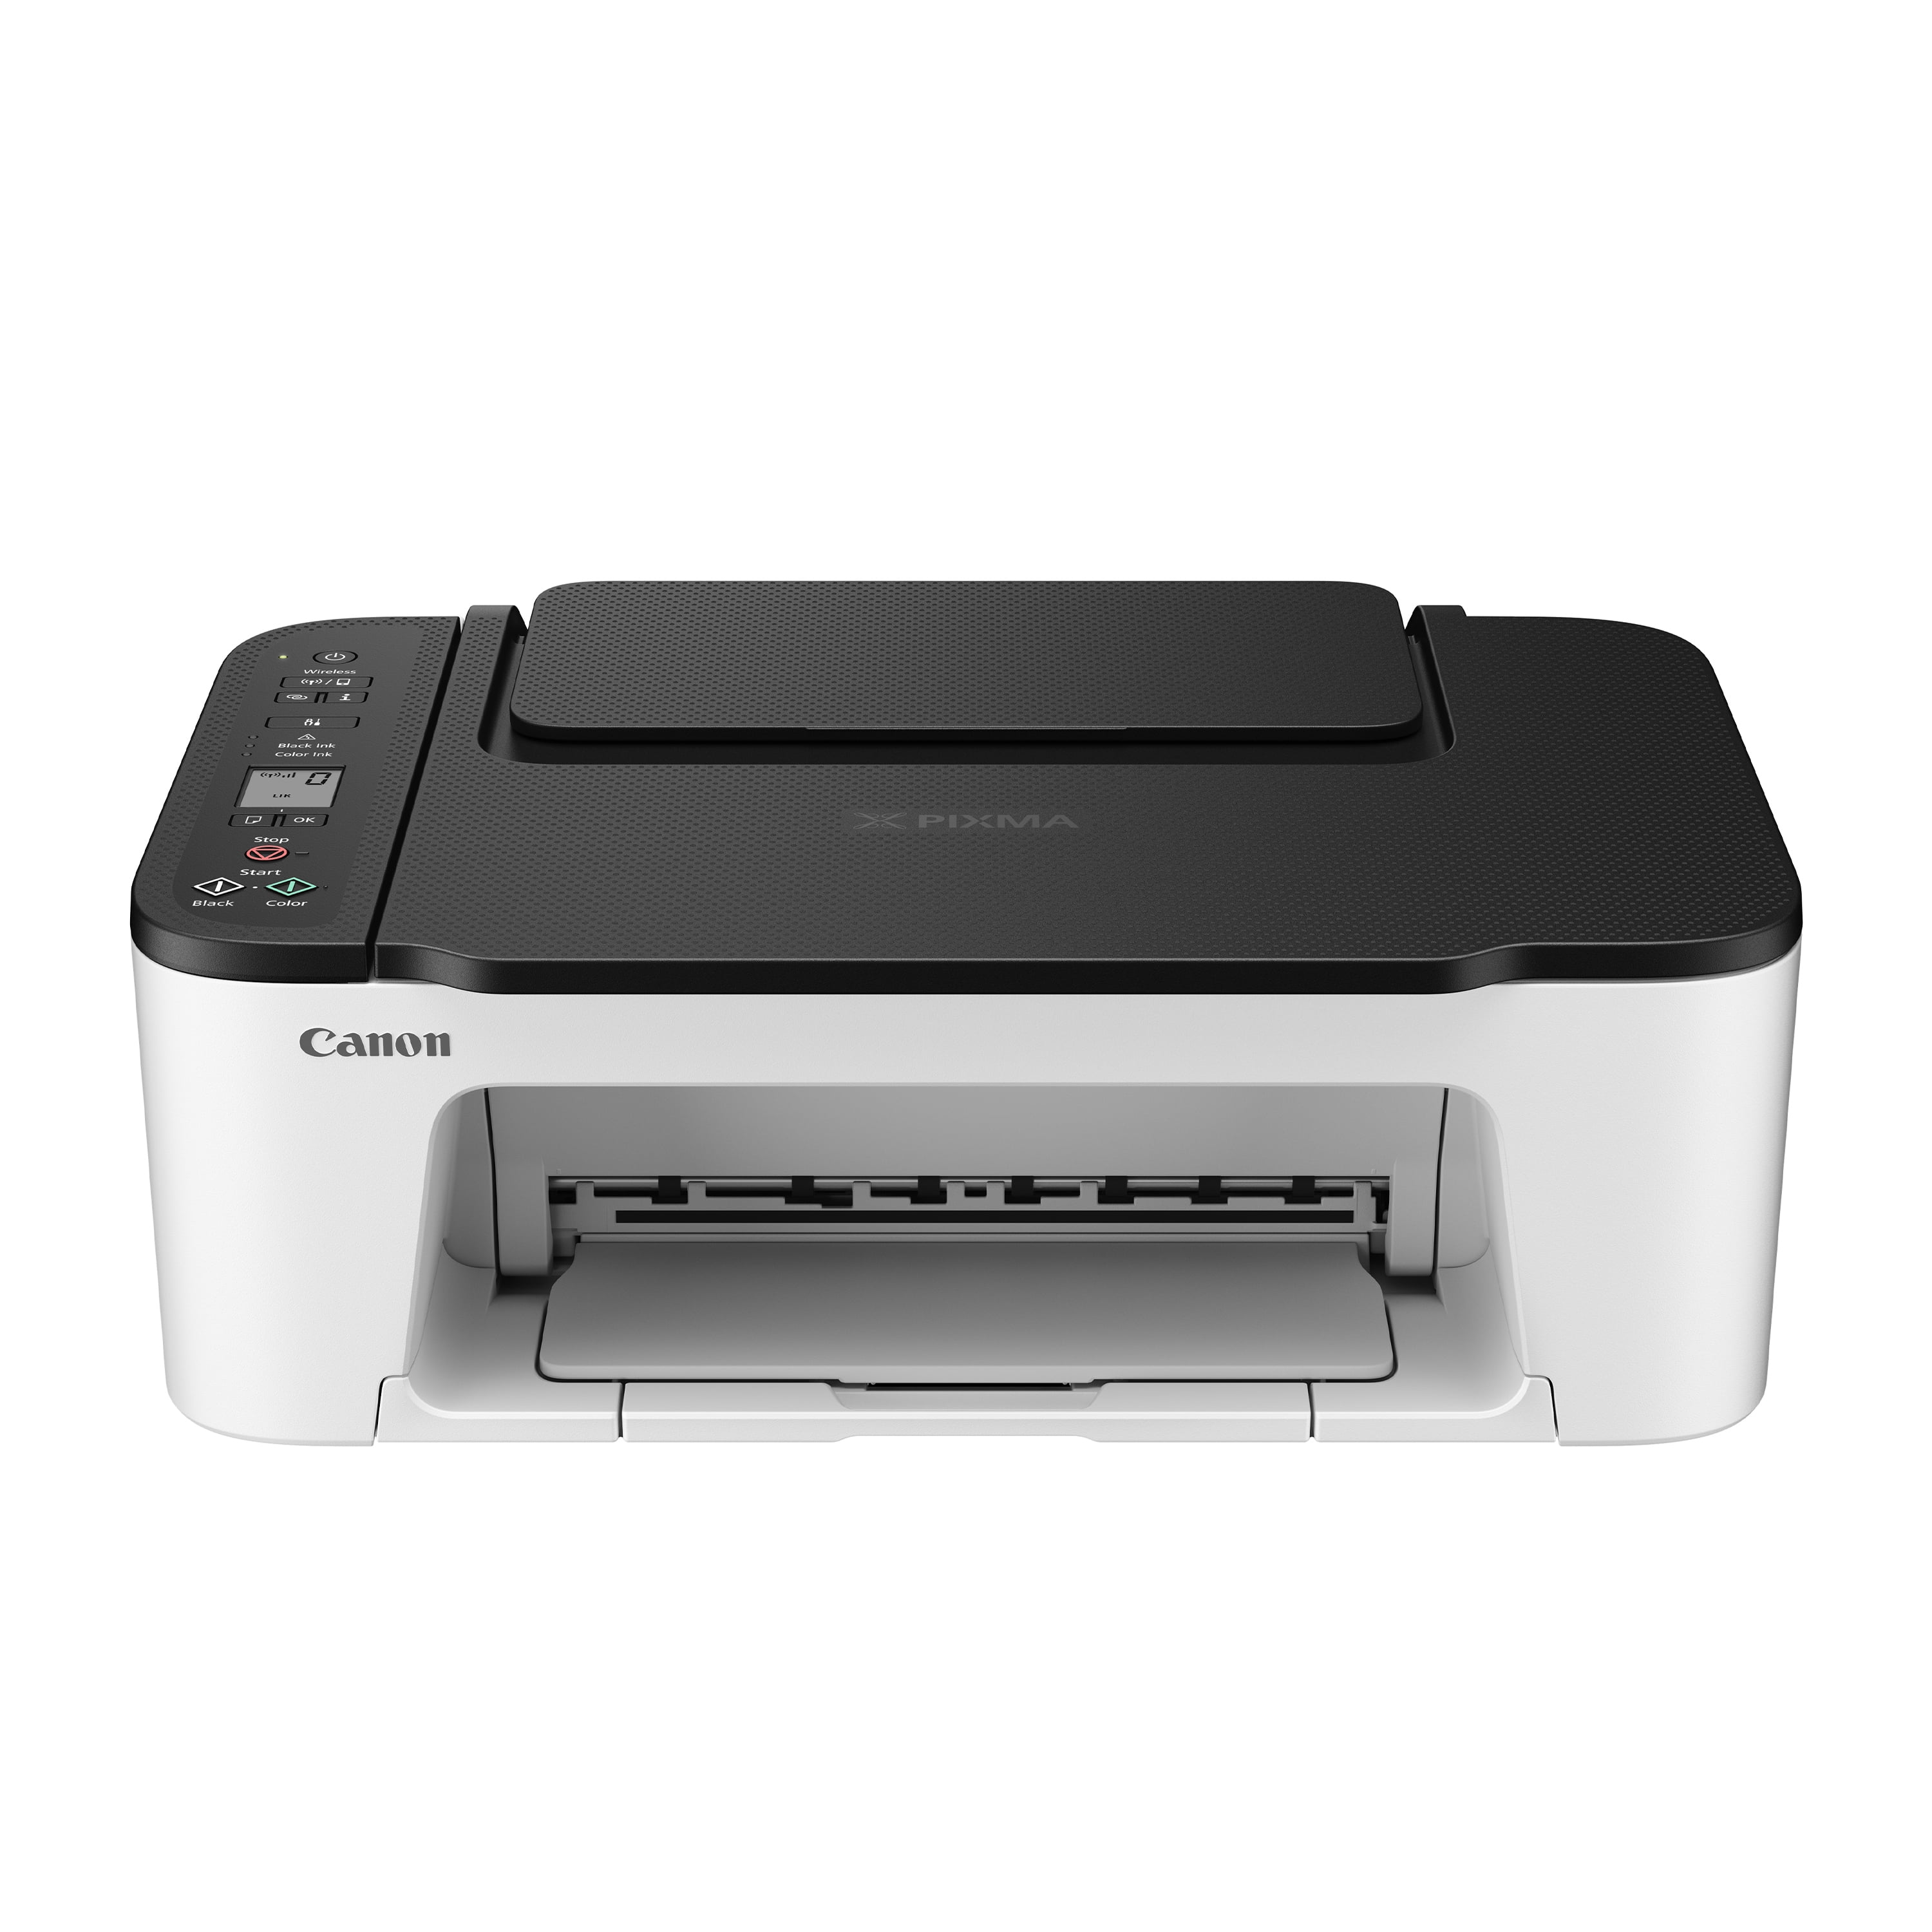 HP OfficeJet 8022 Wireless All-In-One Color Inkjet Printer (Refurbished)